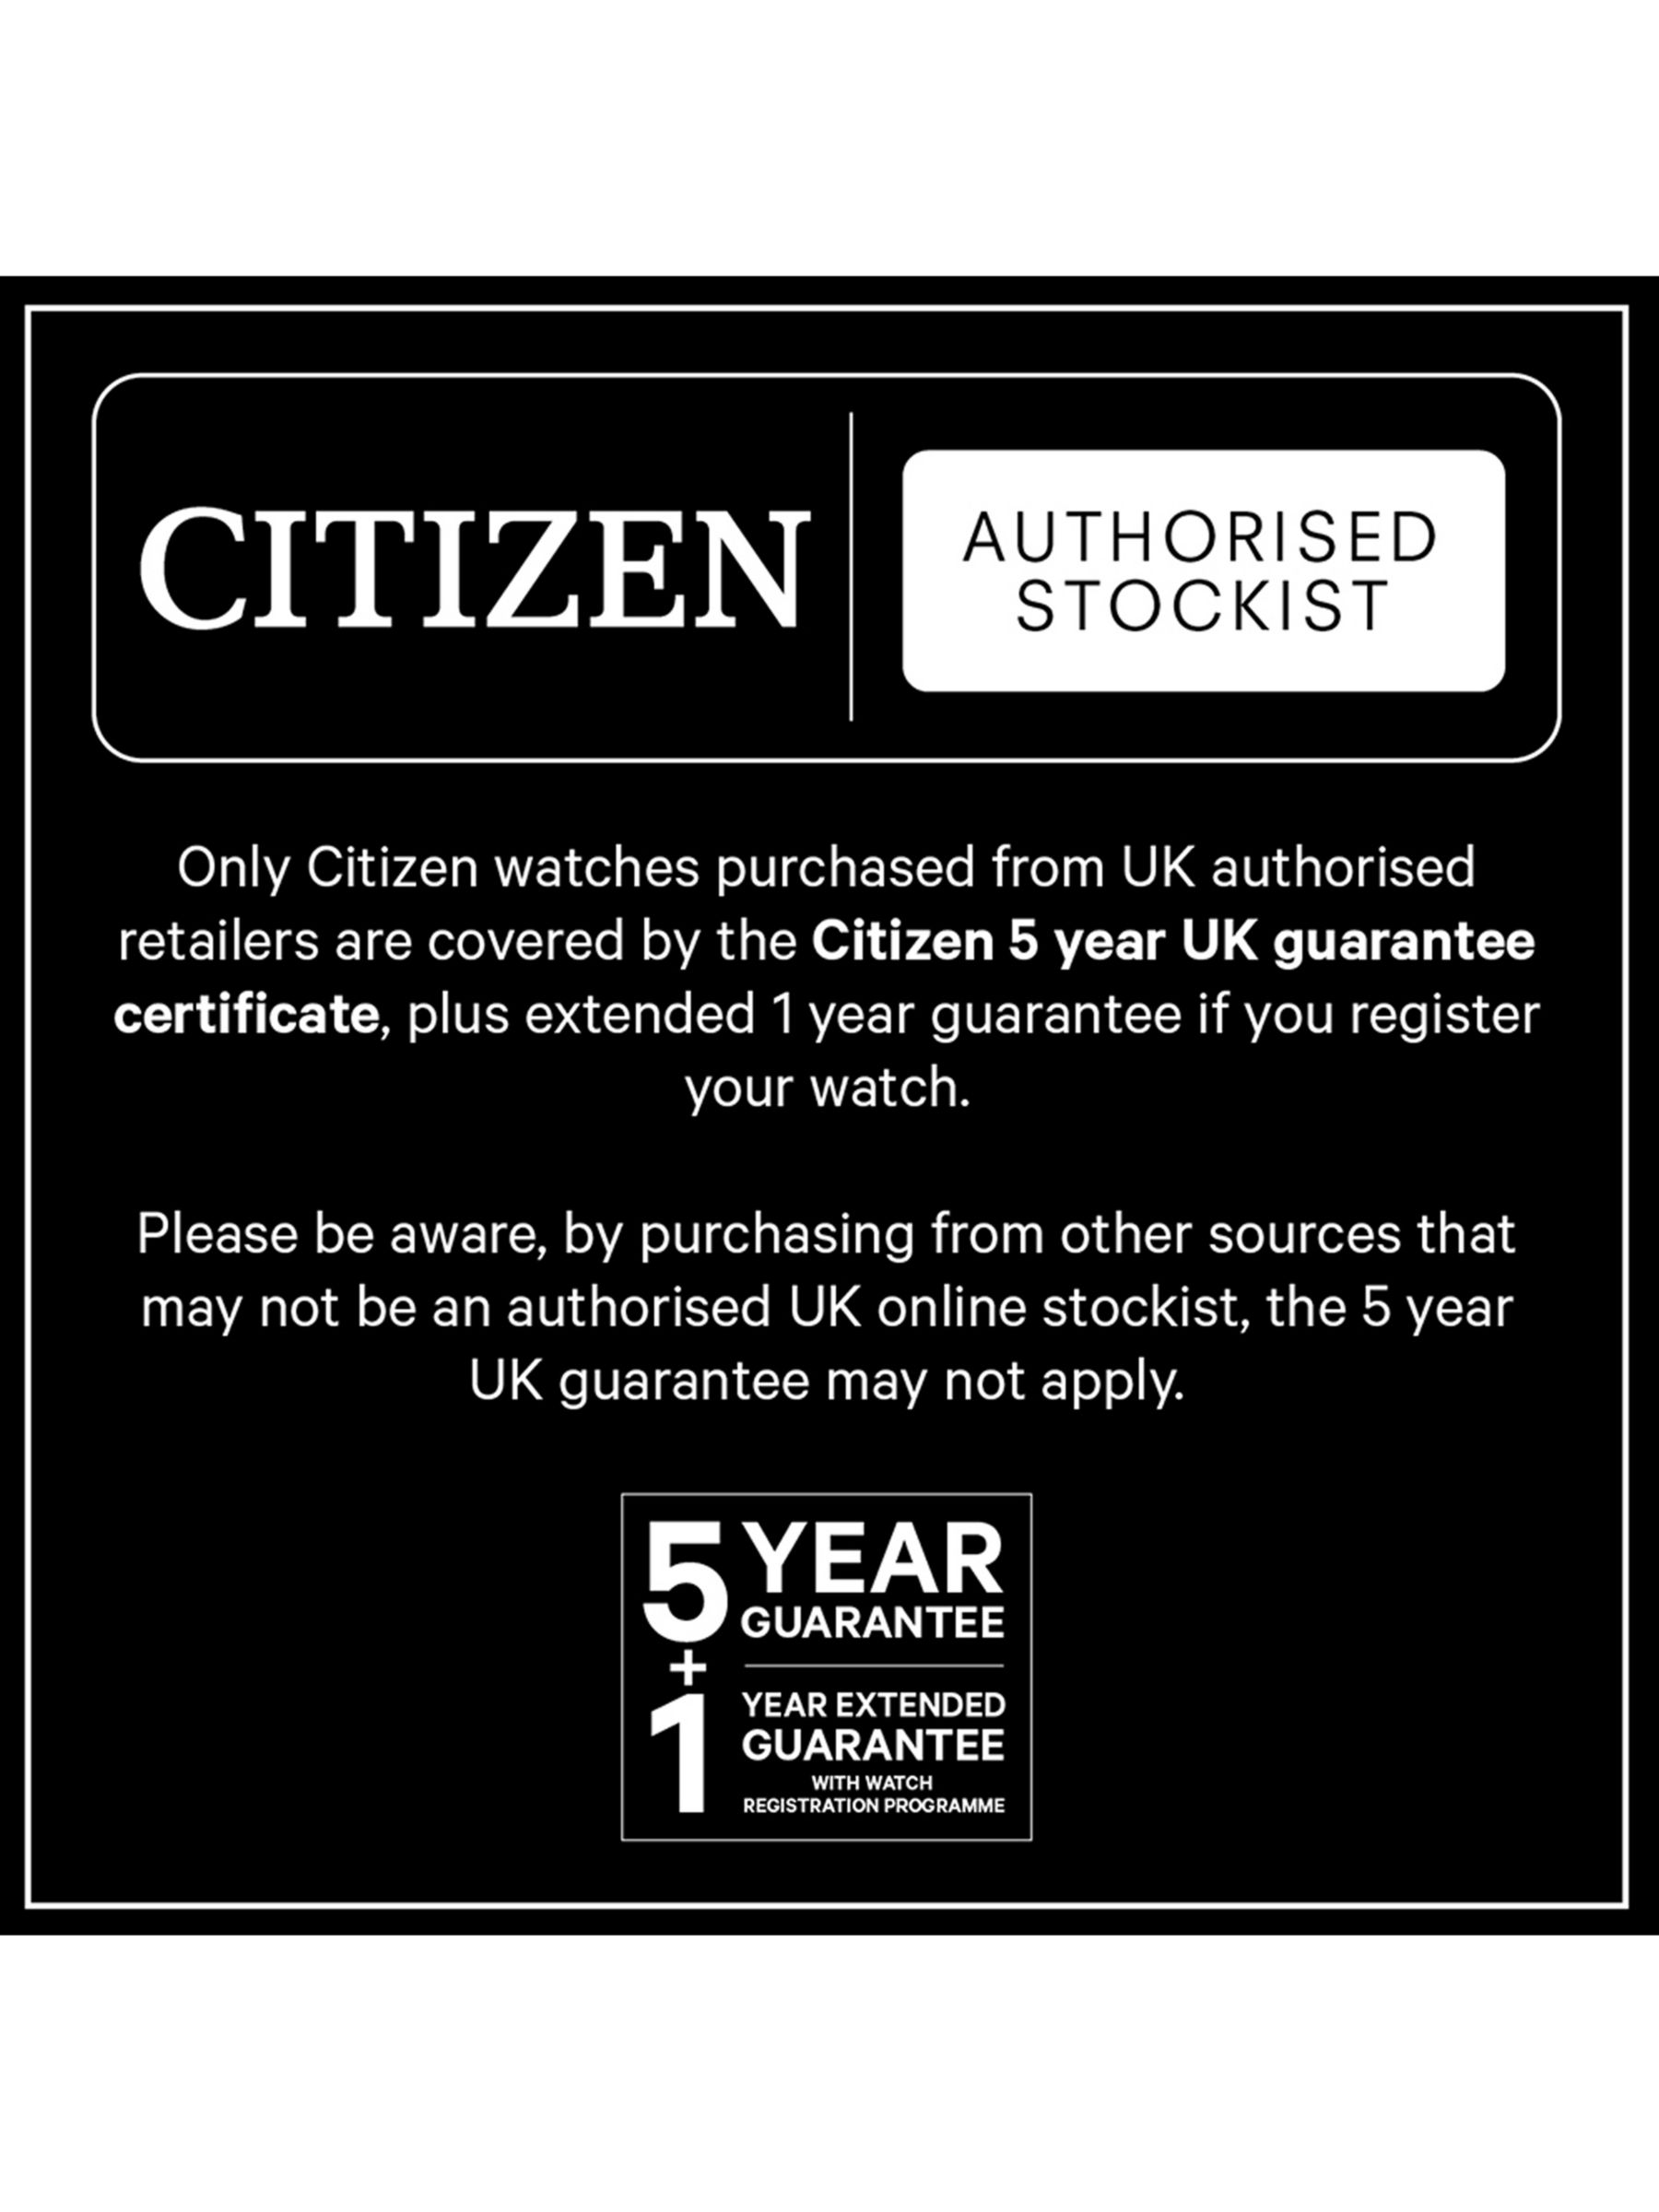 Buy Citizen BN0155-08E Men's ProMaster Dive Eco-Drive Strap Watch, Black/Green Online at johnlewis.com